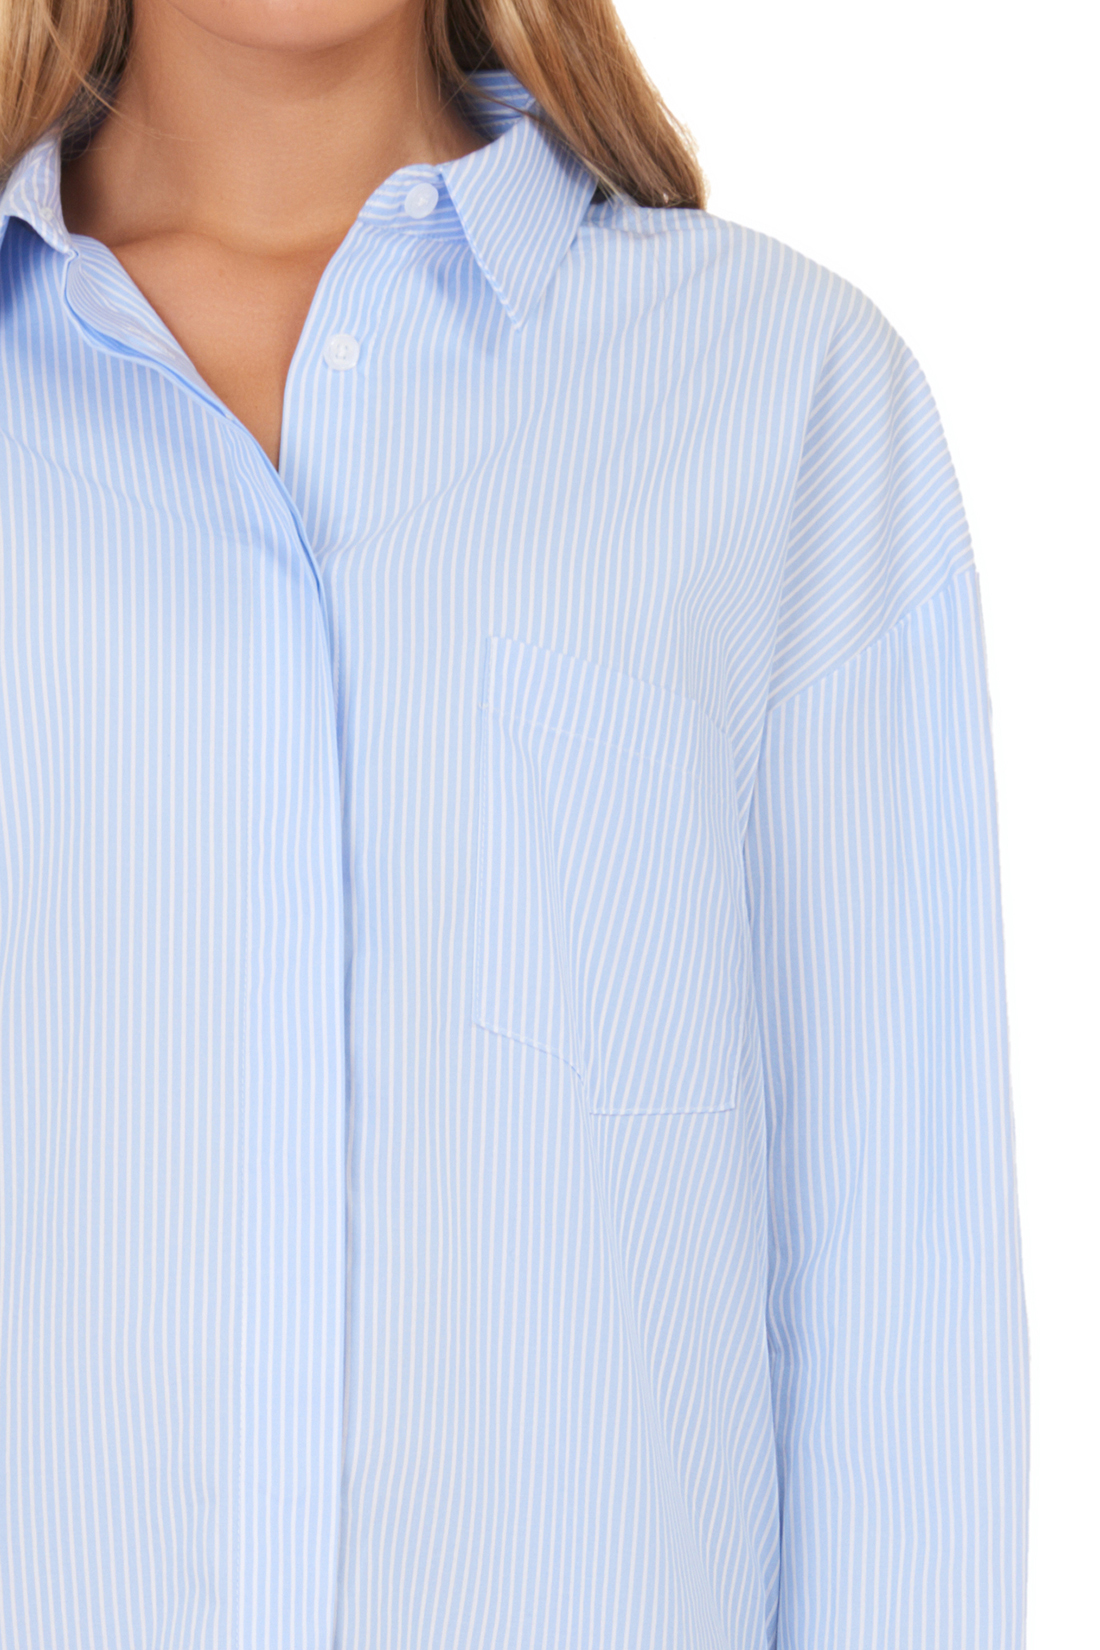 Прямая рубашка в полоску (арт. baon B177516), размер L, цвет белый Прямая рубашка в полоску (арт. baon B177516) - фото 4